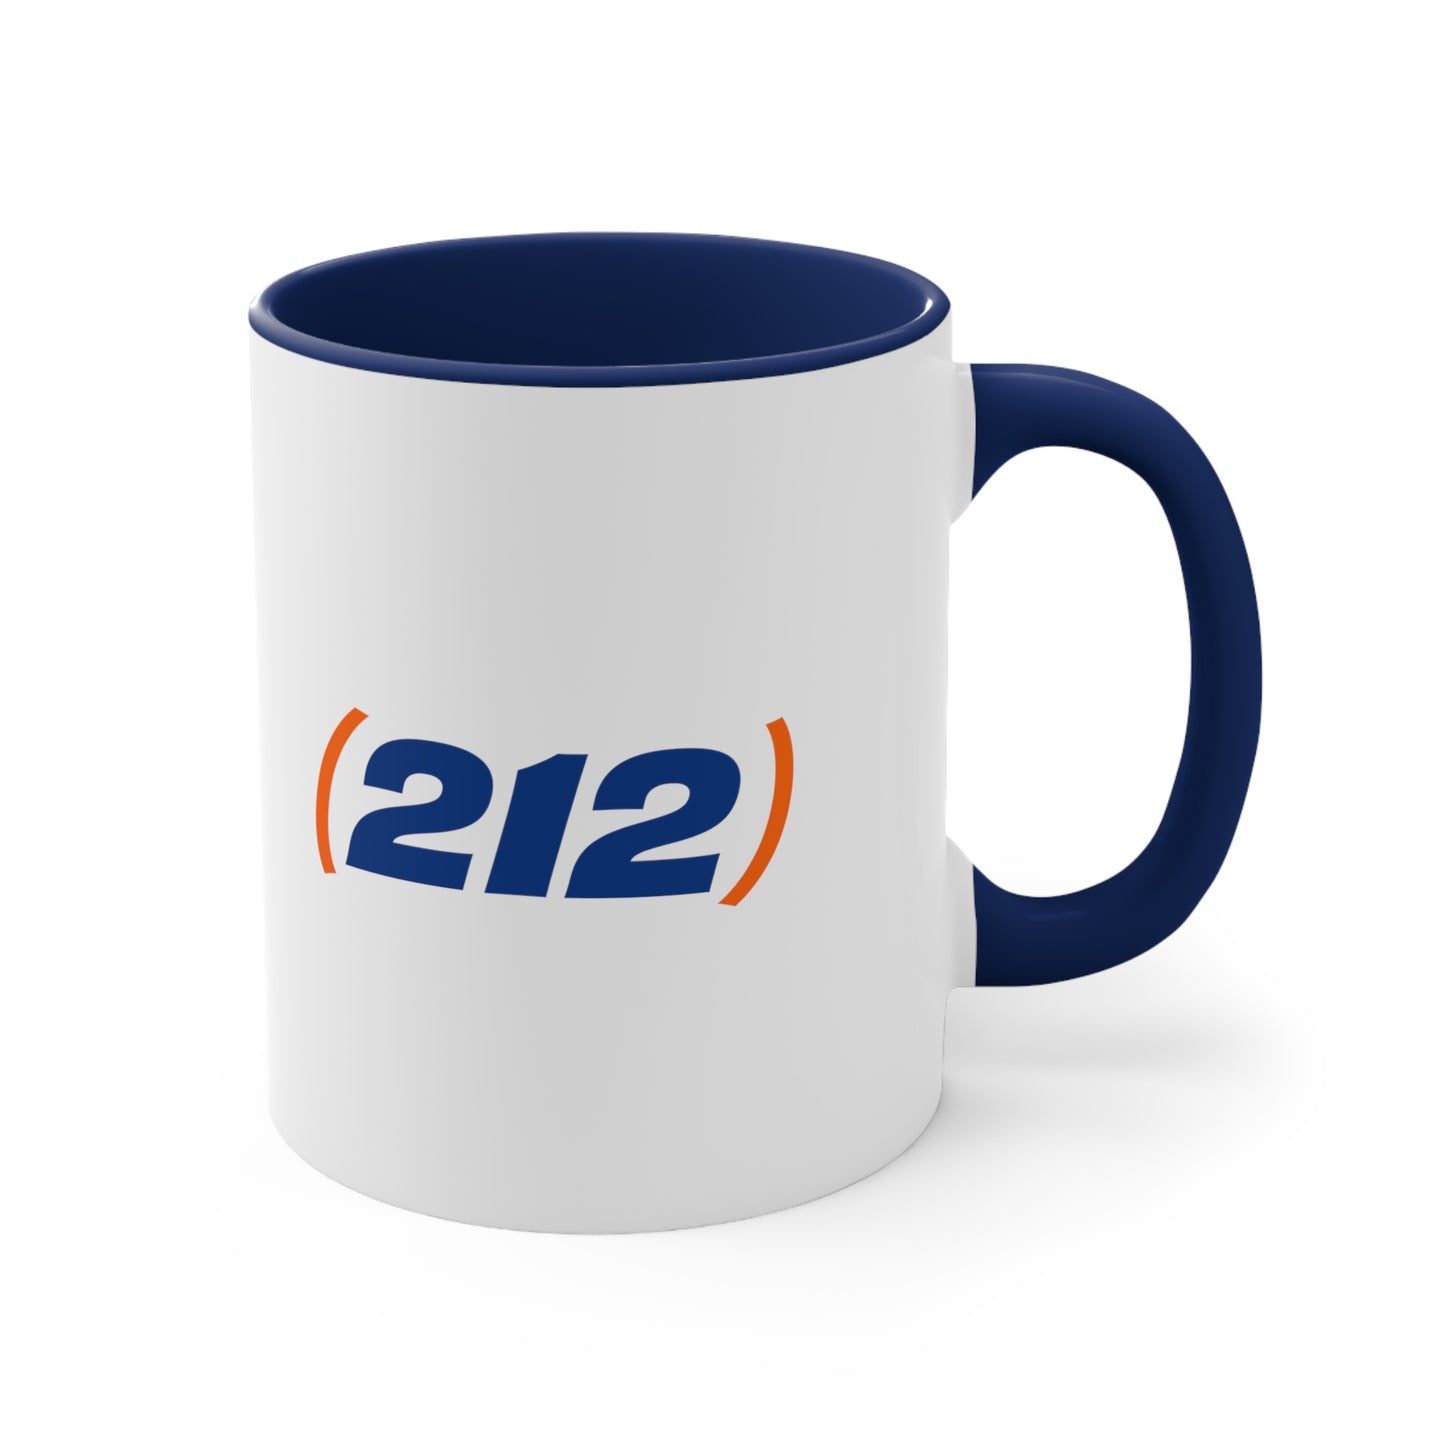 (212) Coffee Mug